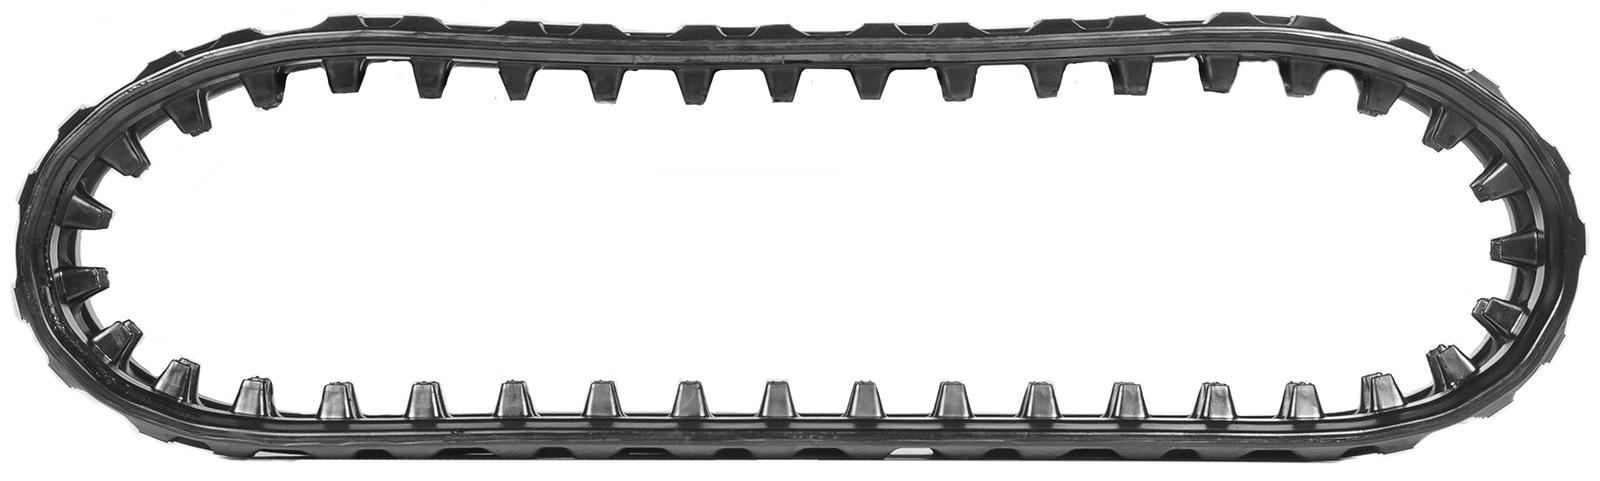 set of 2 7" heavy duty rubber track (180x72x36)